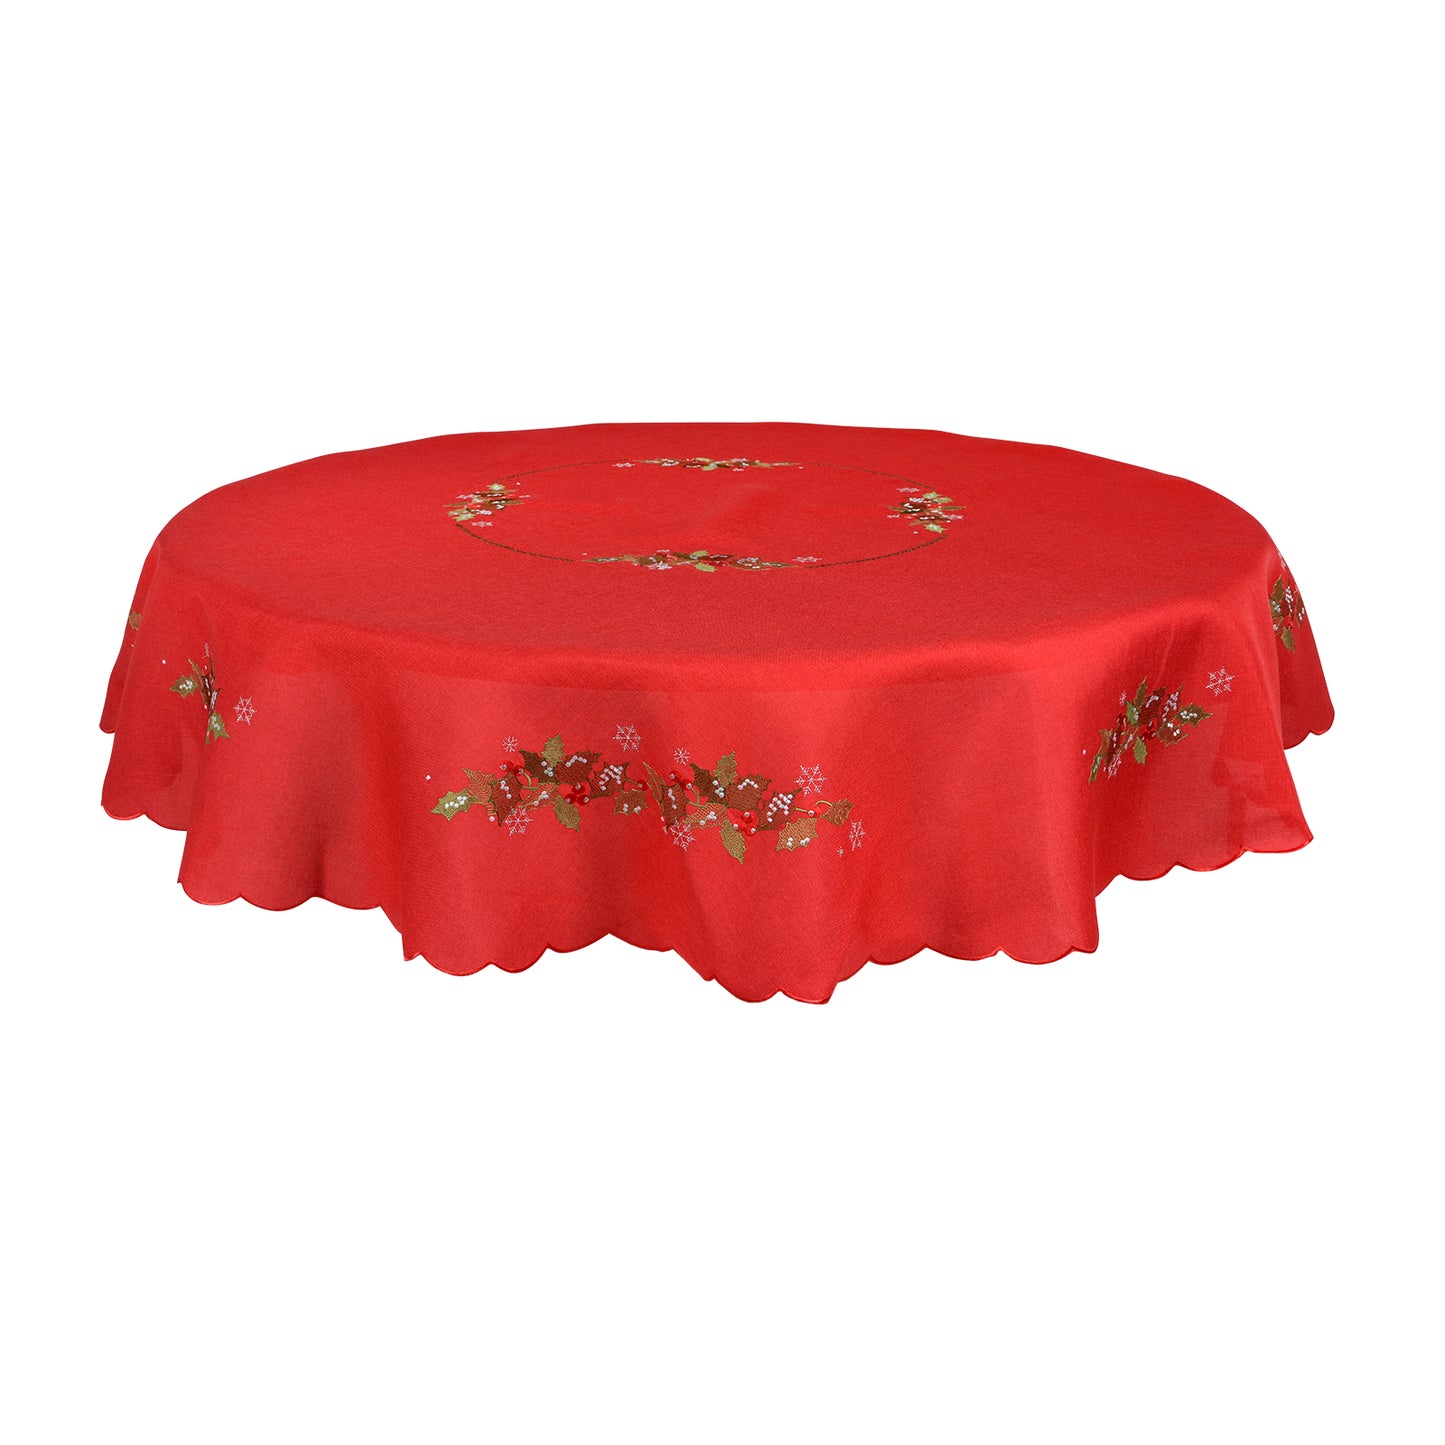 Mr Crimbo Holly & Berry Embroidered Tablecloth/Napkin - MrCrimbo.co.uk -XS5885 - Red -christmas napkins